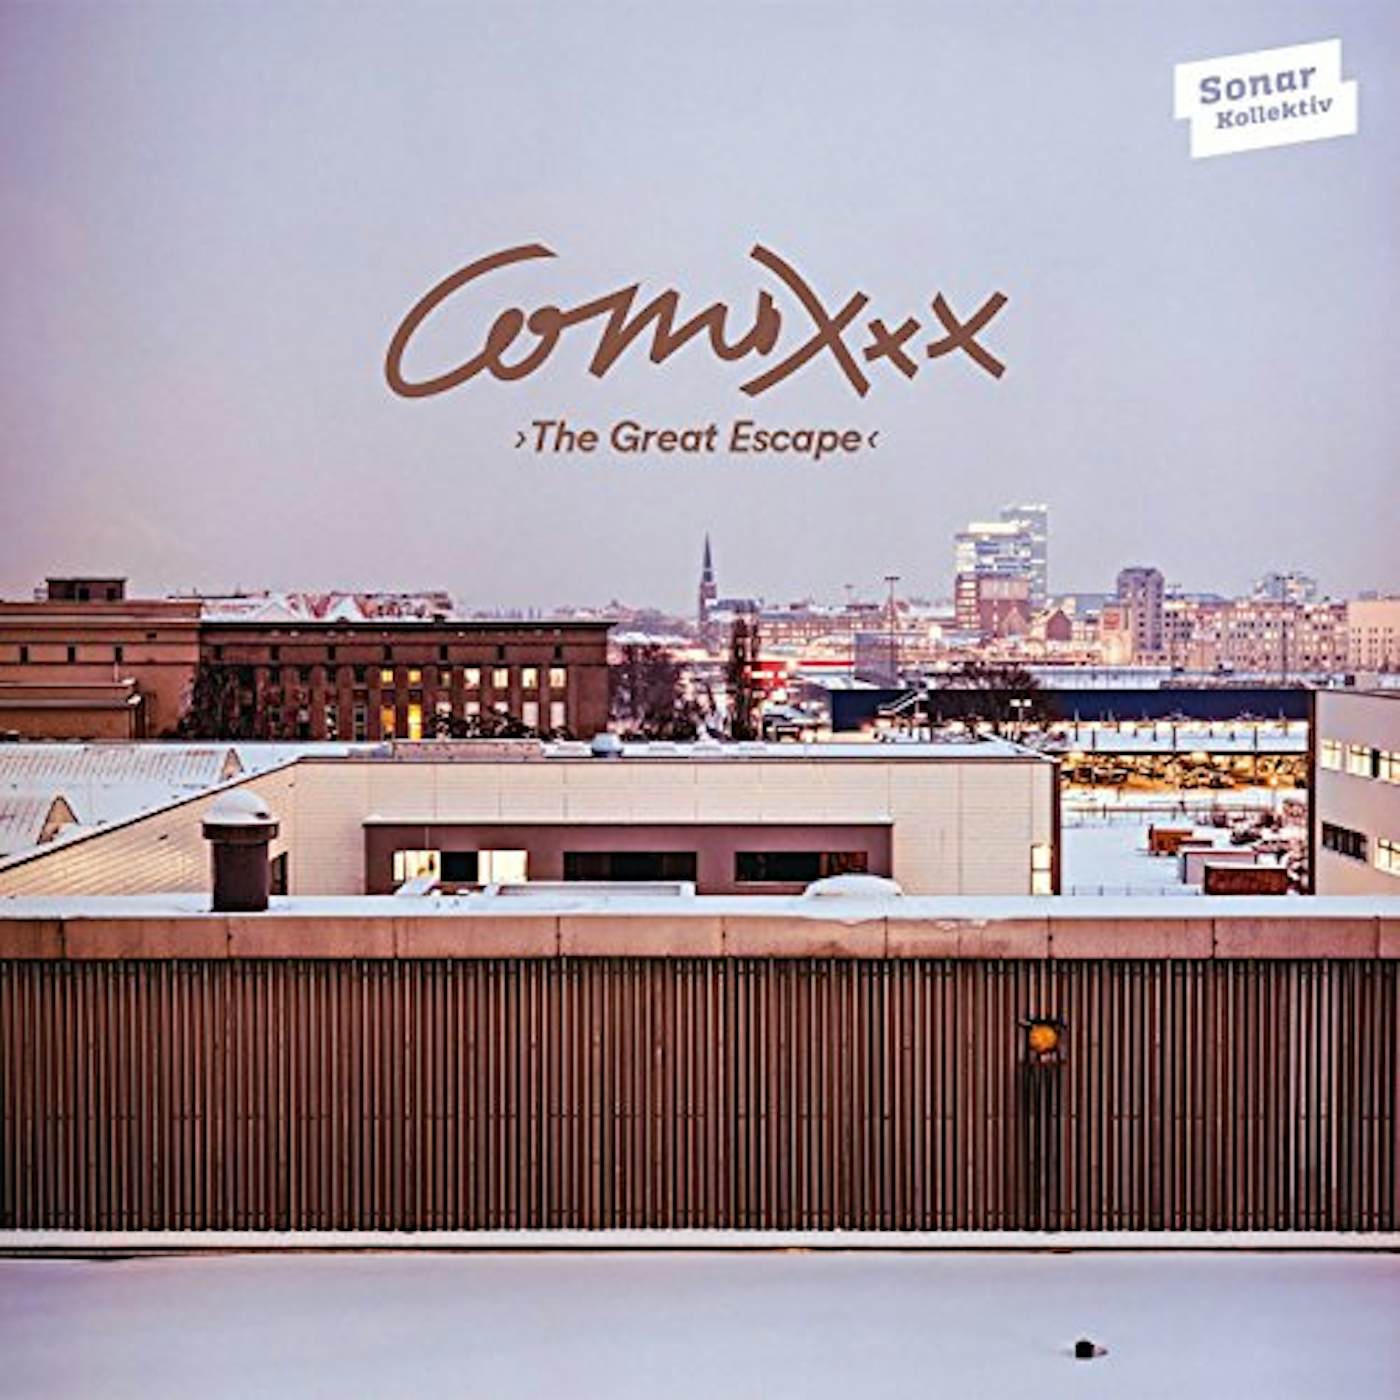 Comixxx GREAT ESCAPE CD